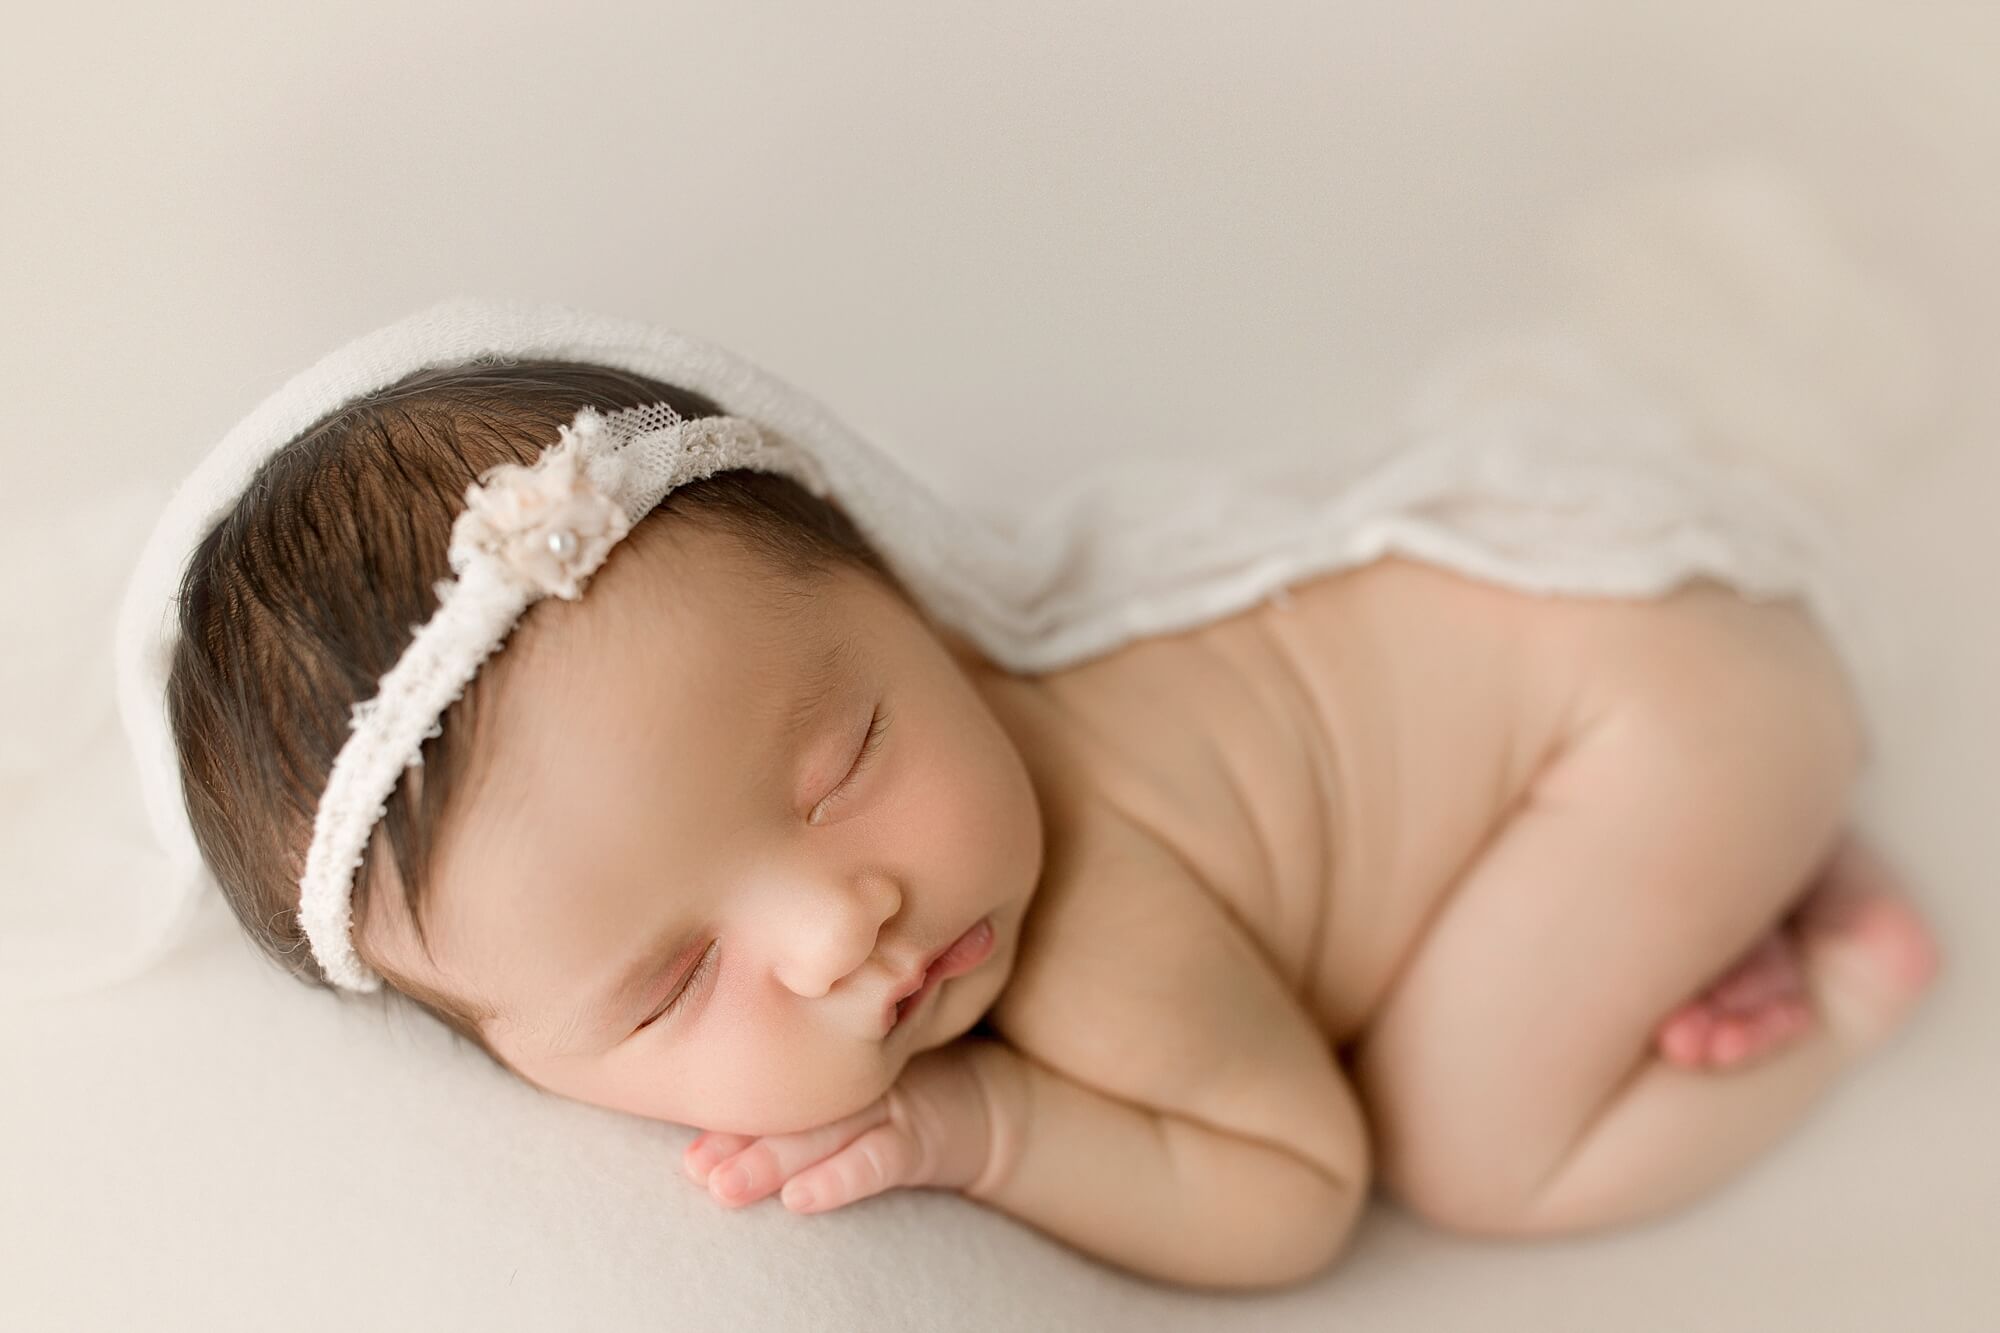 issaquah newborn photographer | baby girl r